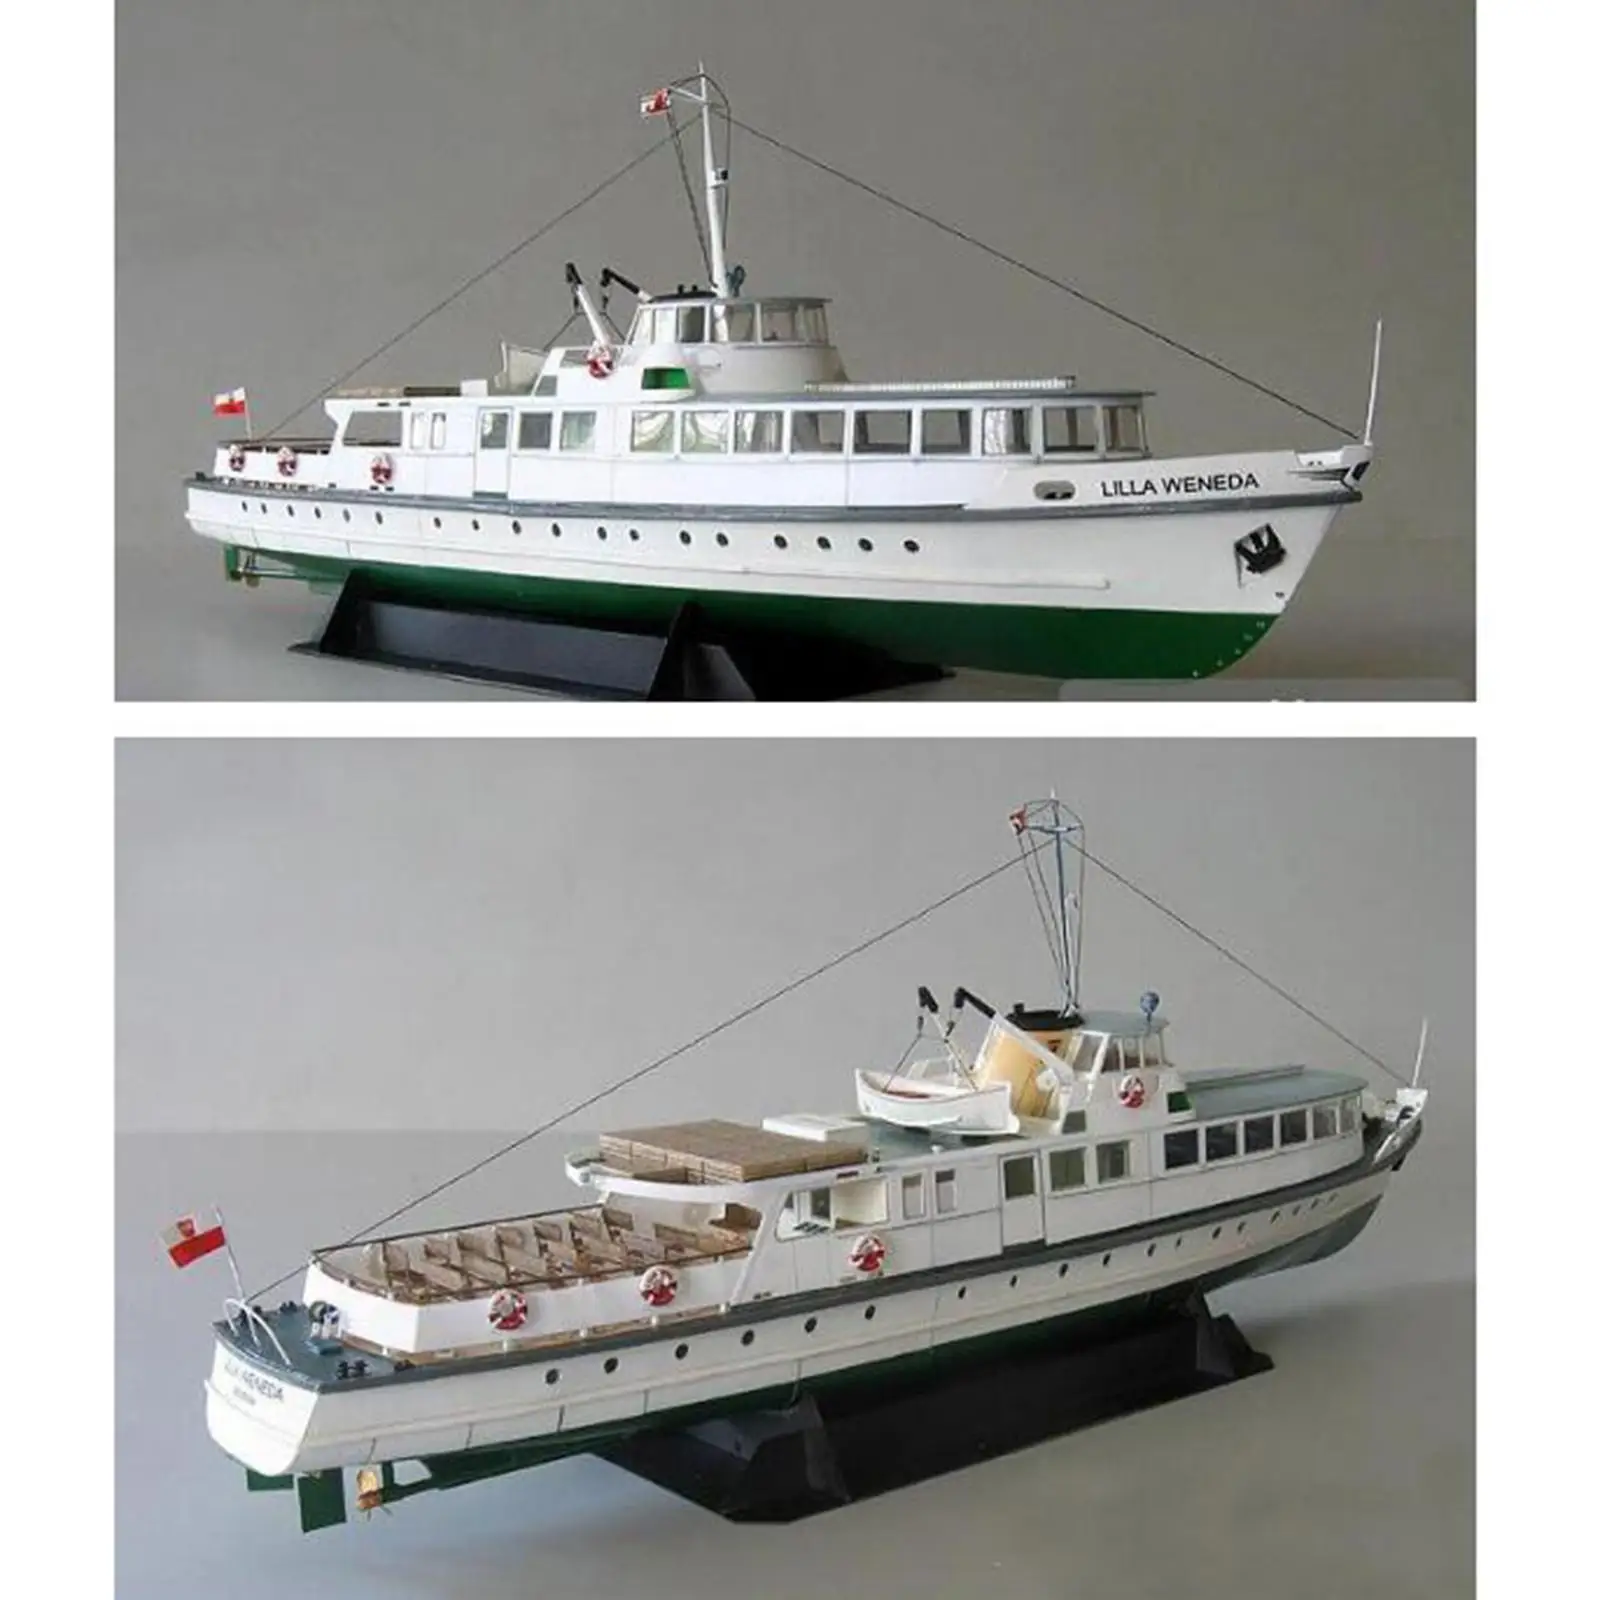 3D Coastal Ferry Boat Template Kit 1/100 Lilla WENEDA Educational Game